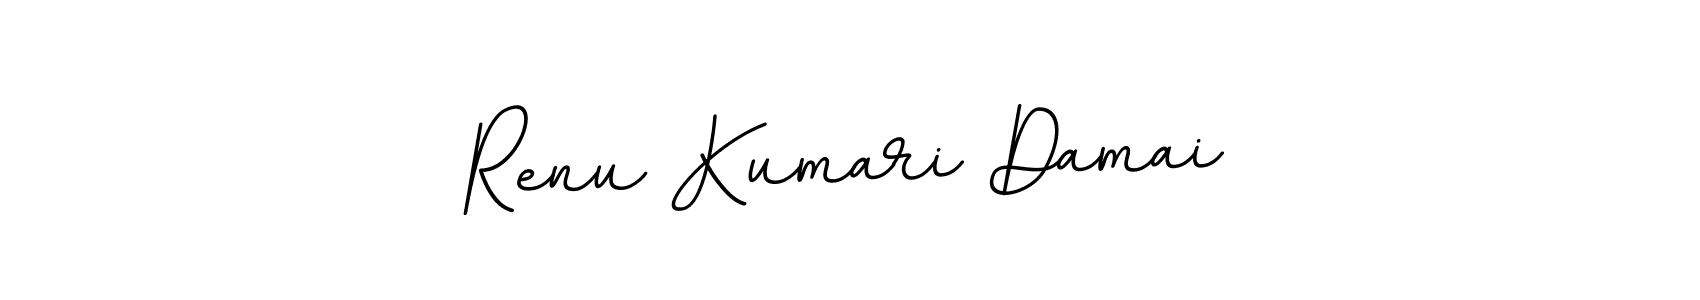 How to Draw Renu Kumari Damai signature style? BallpointsItalic-DORy9 is a latest design signature styles for name Renu Kumari Damai. Renu Kumari Damai signature style 11 images and pictures png